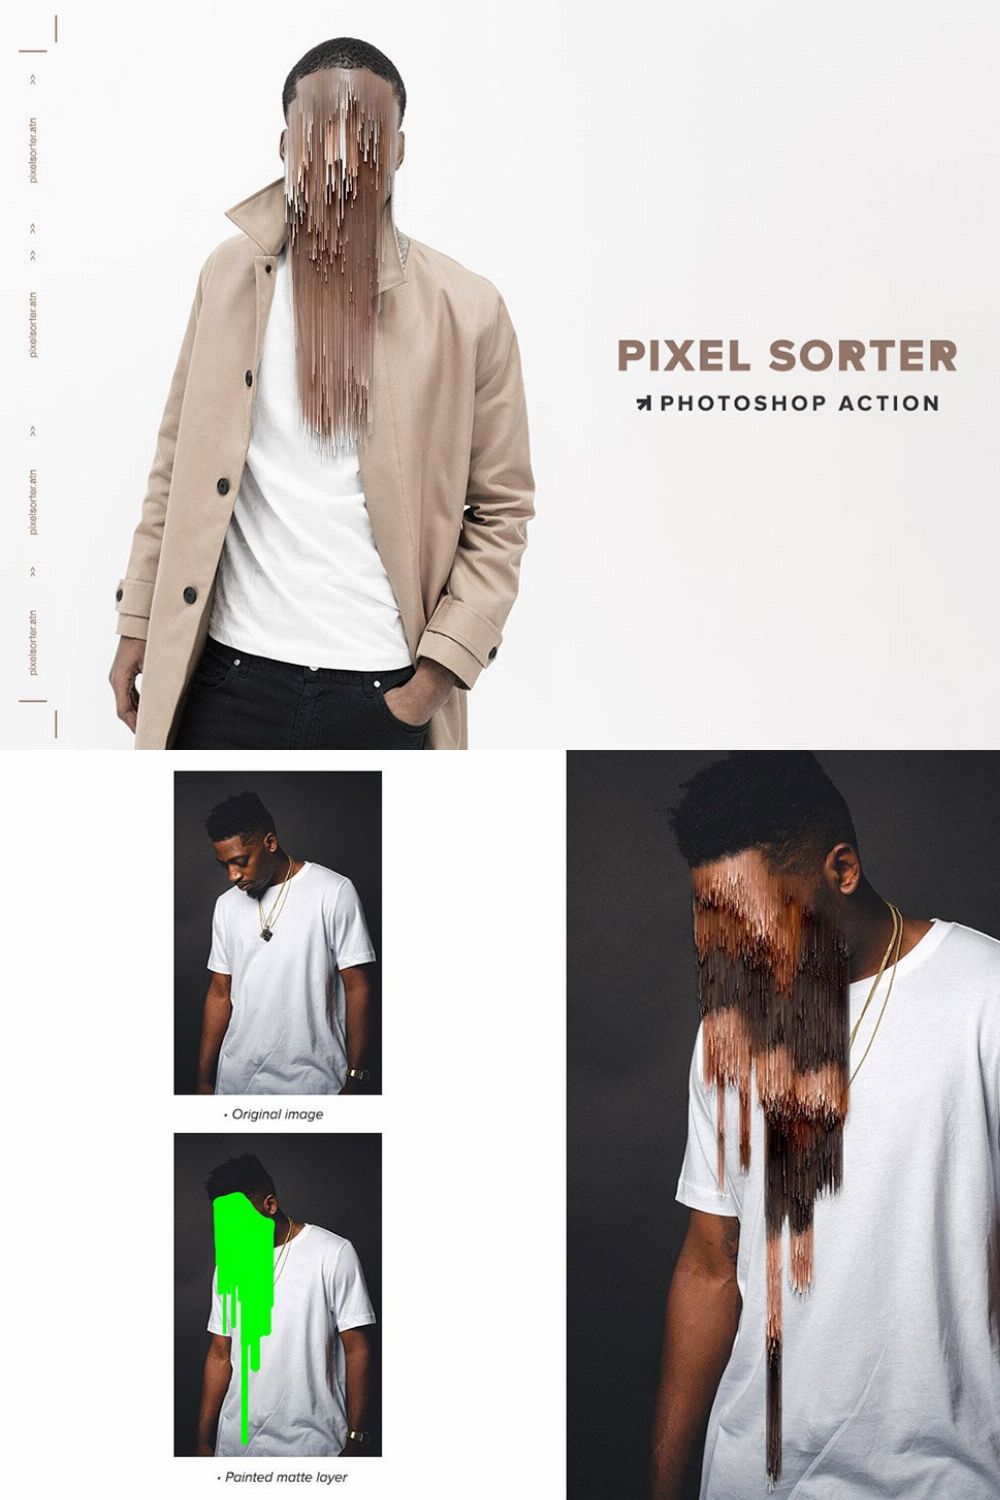 Pixel Sorter Photoshop Action pinterest preview image.